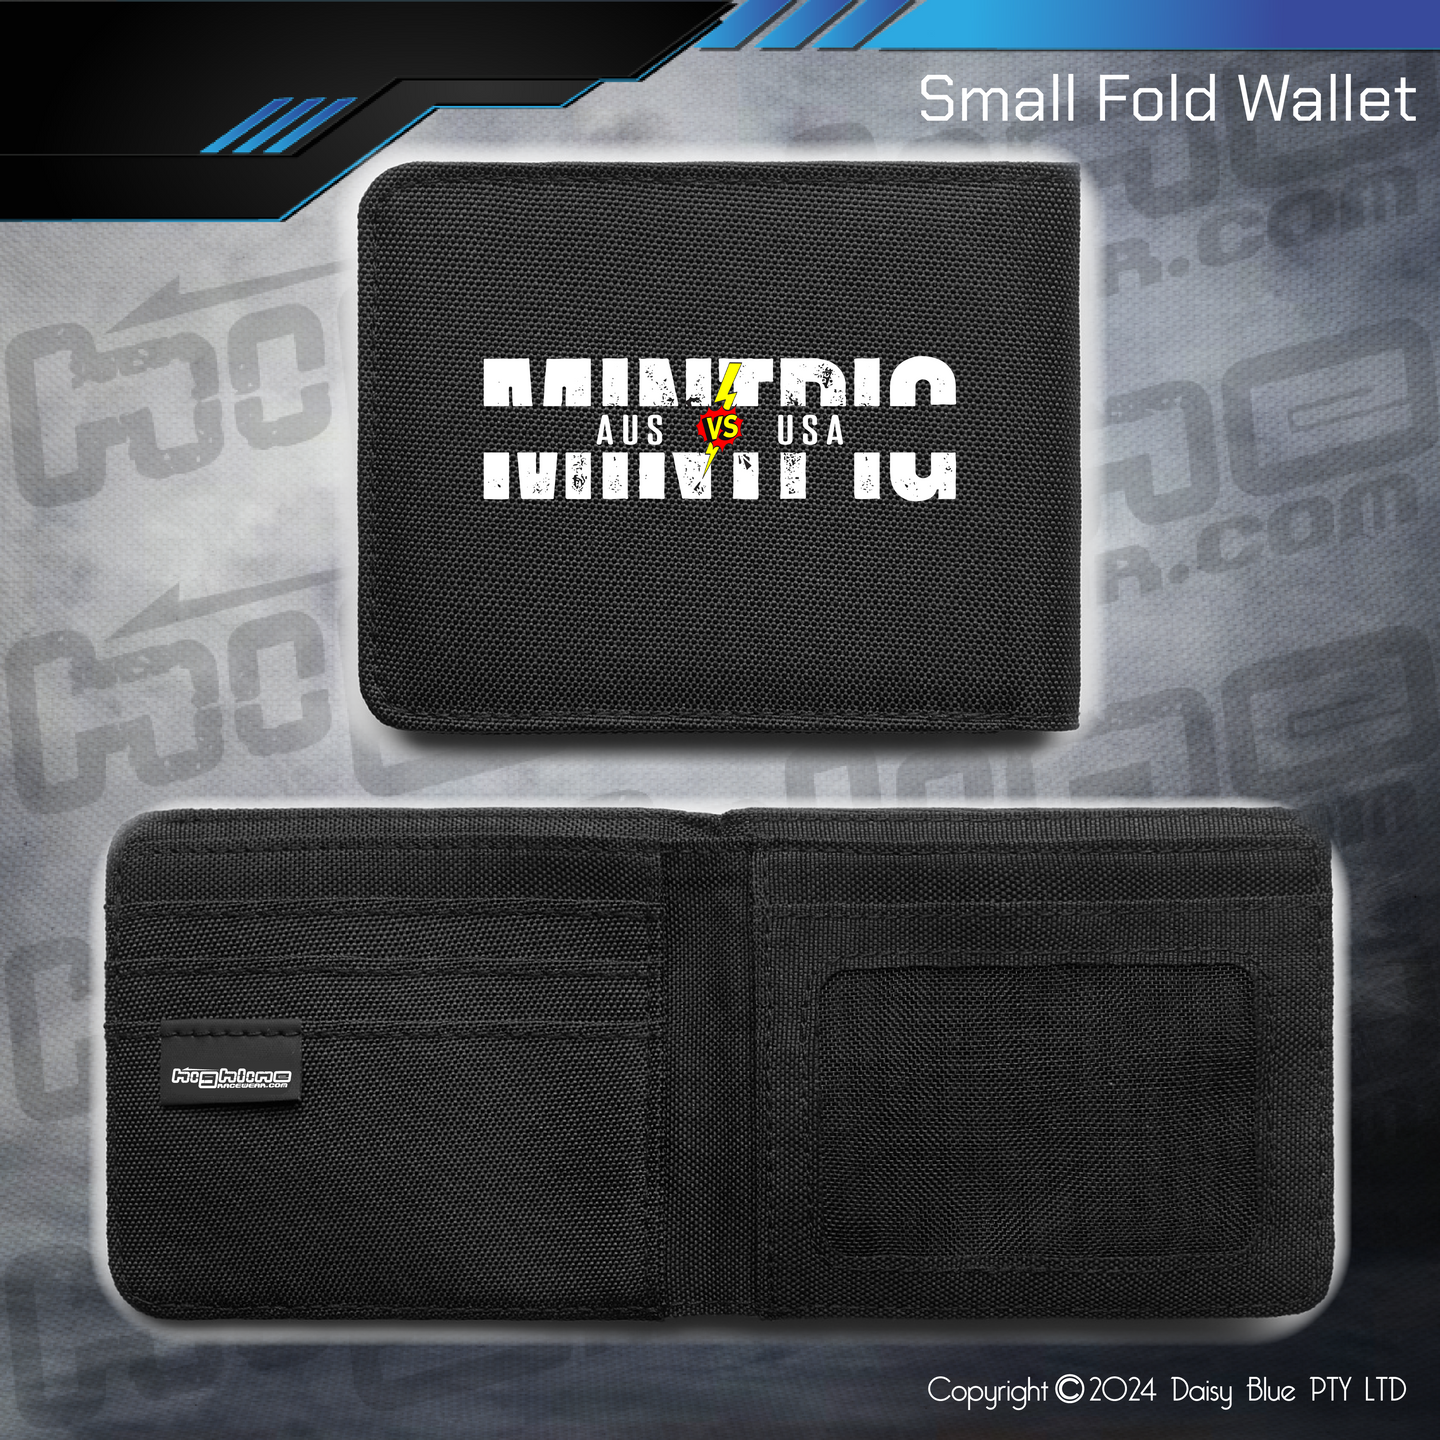 Compact Wallet - Mint Pig 100 AUS VS USA